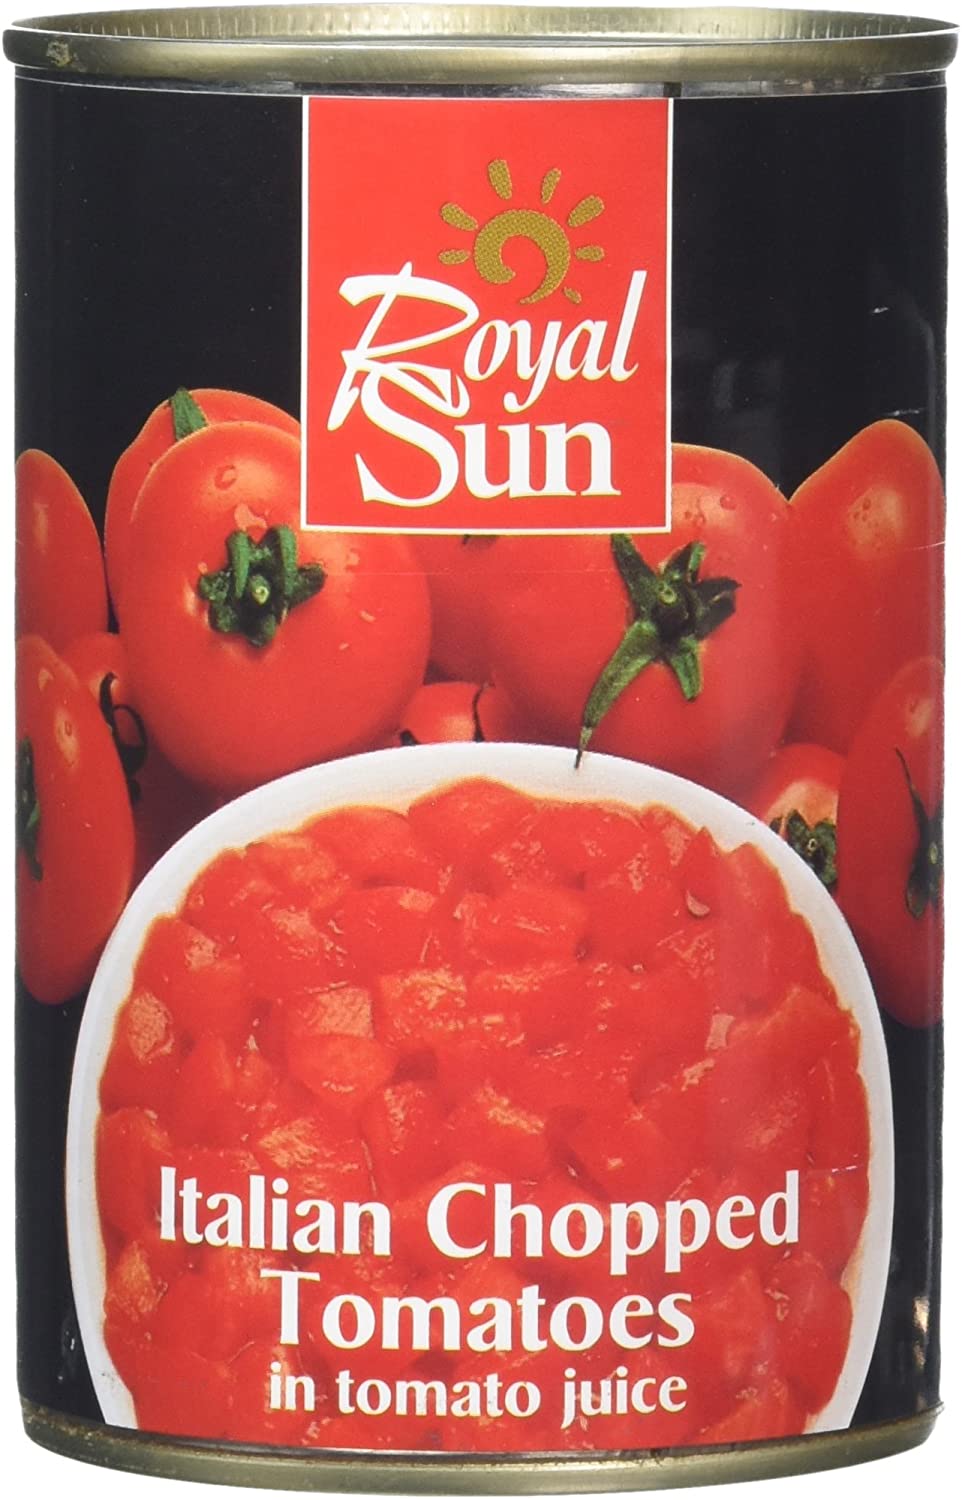 Royal Sun Chopped Tomatoes 400g Box of 24